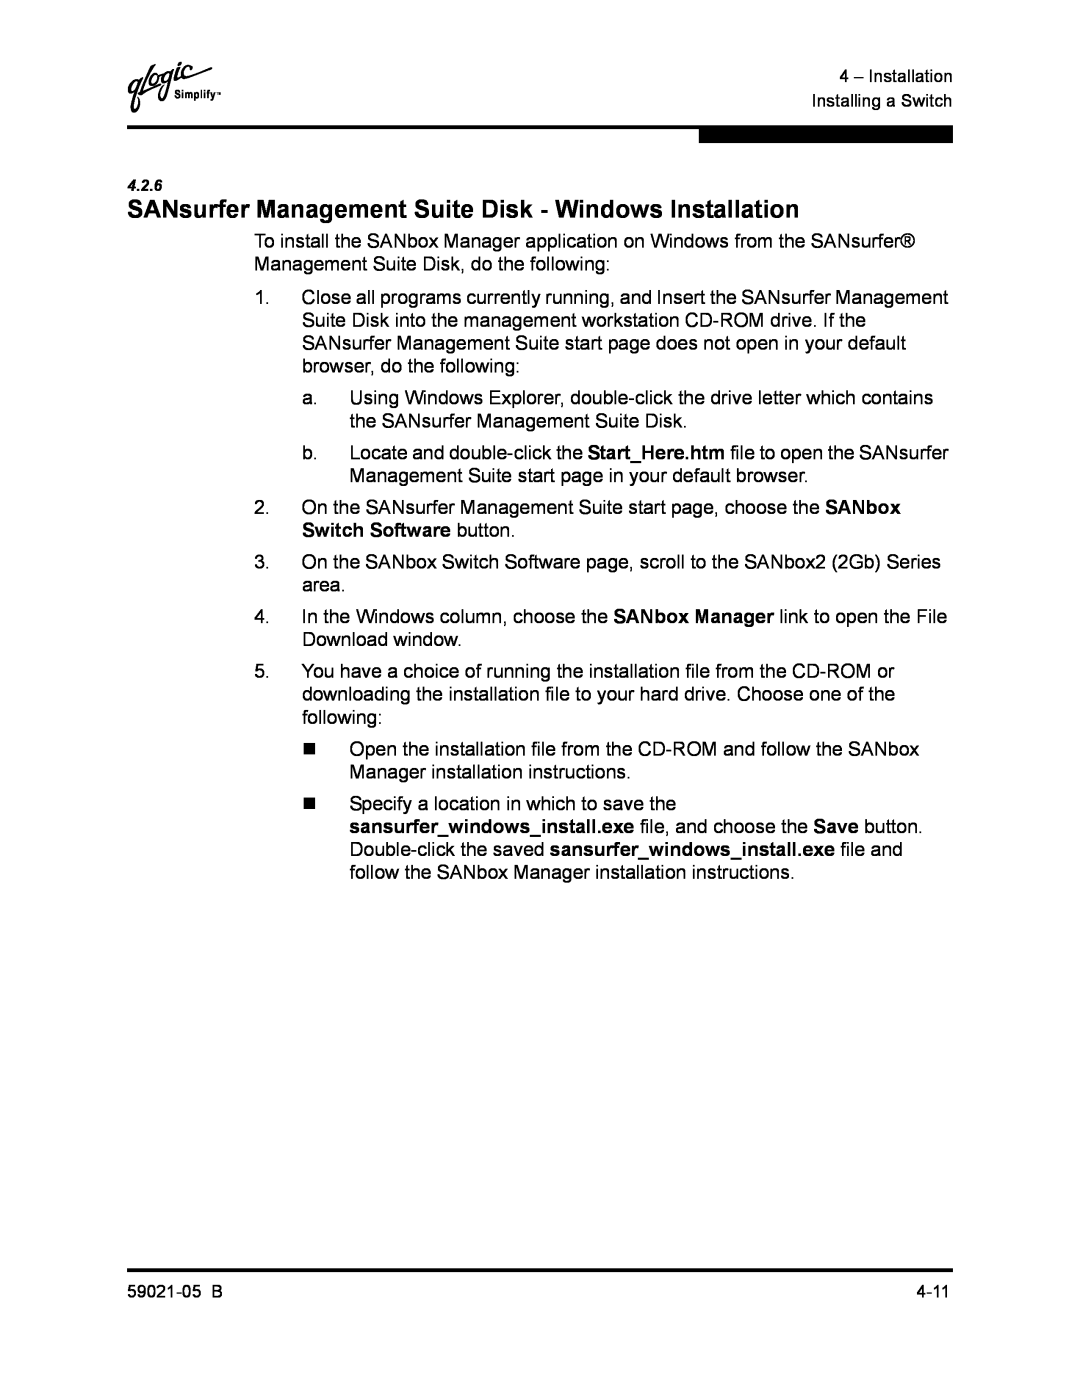 Q-Logic 59021-05 B manual SANsurfer Management Suite Disk - Windows Installation 